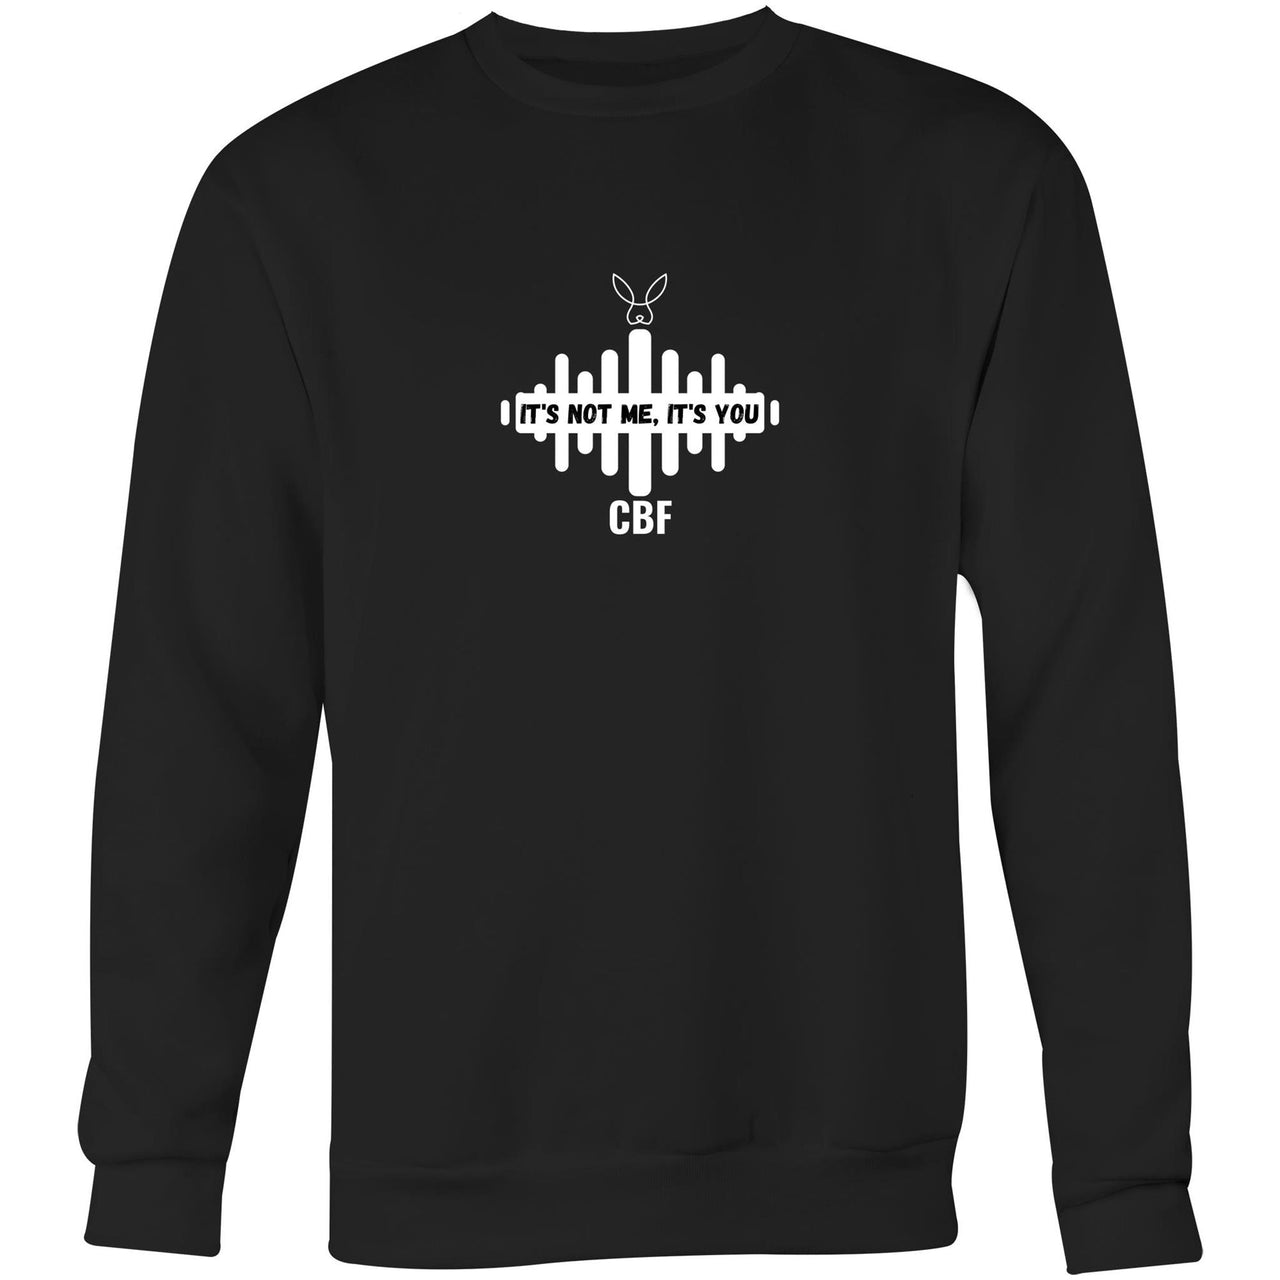 Not Me it's You Crew Sweatshirt by CBF Clothing in Black